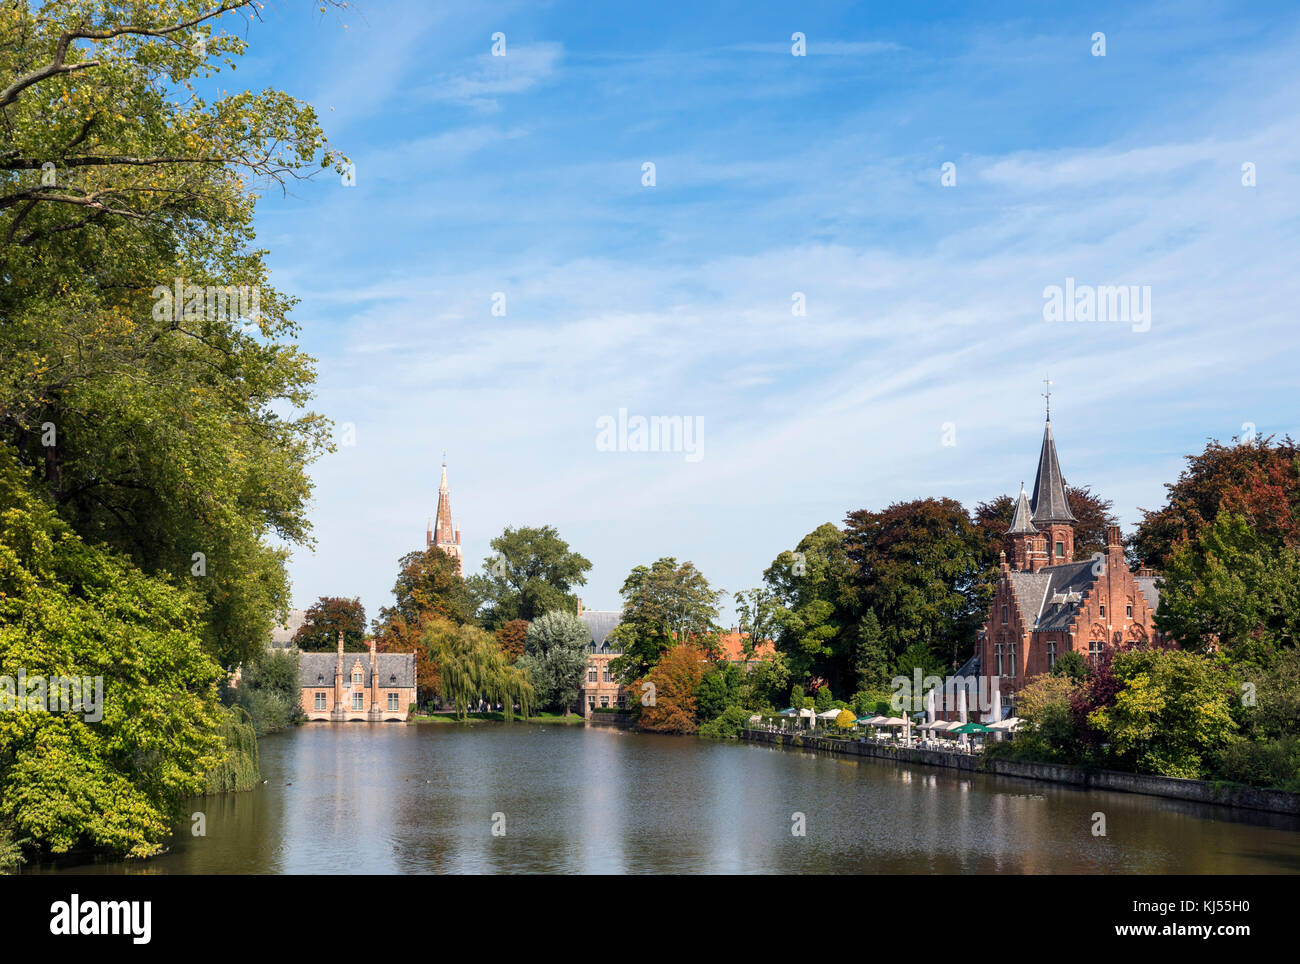 Le Minnewater, Minnewaterpark, Bruges (Brugge), Belgique. Banque D'Images